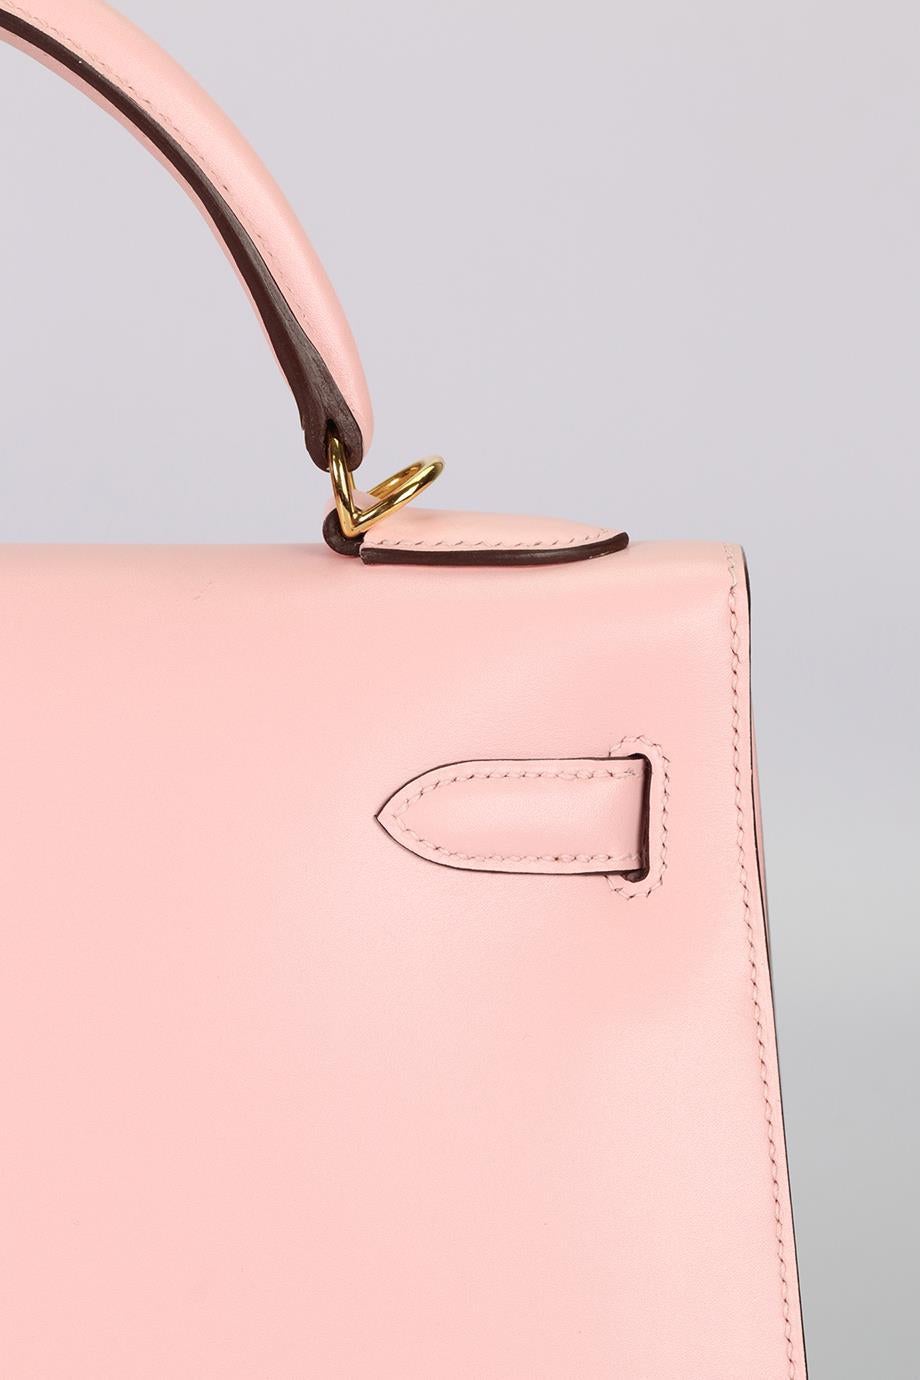 Hermès 2017 Kelly Ii Sellier 32 Cm Box Leather Bag For Sale 3